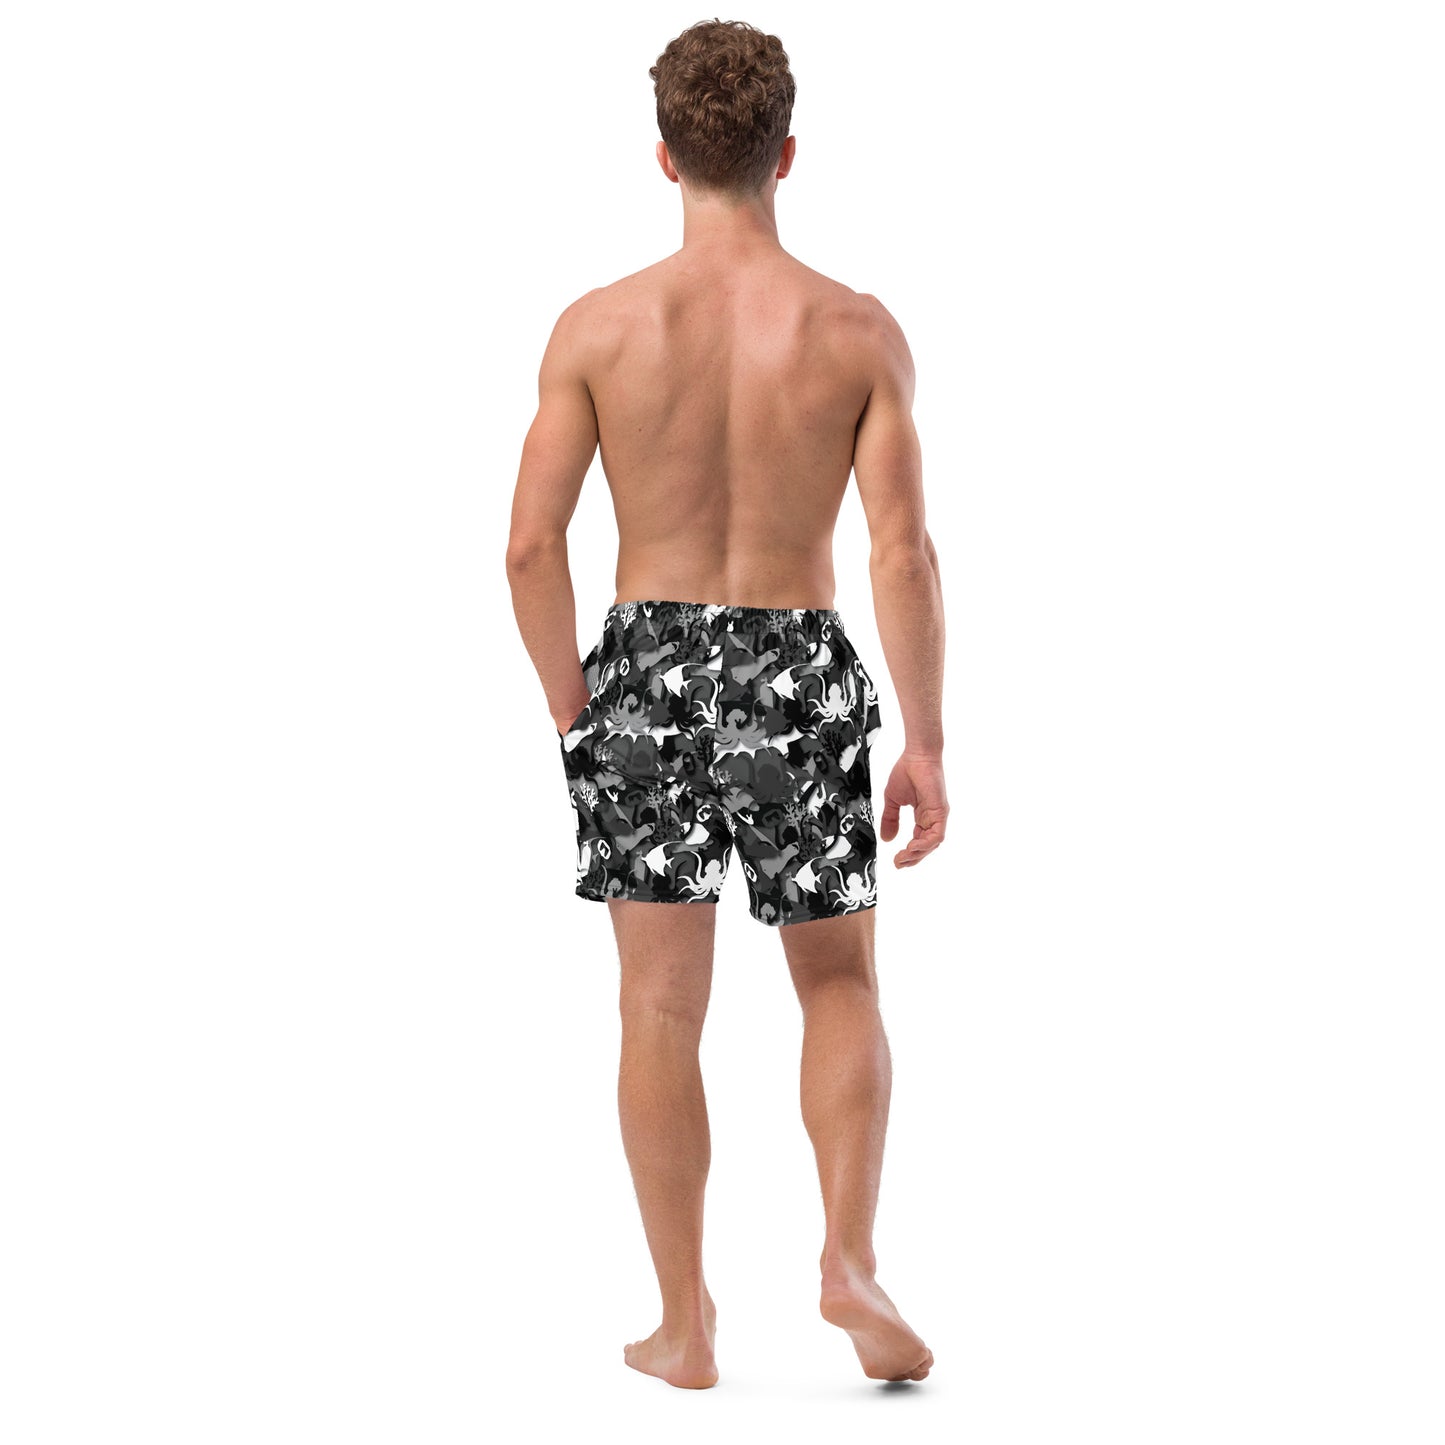 Men's swim trunks Grey Cammo SCUBA Colllection